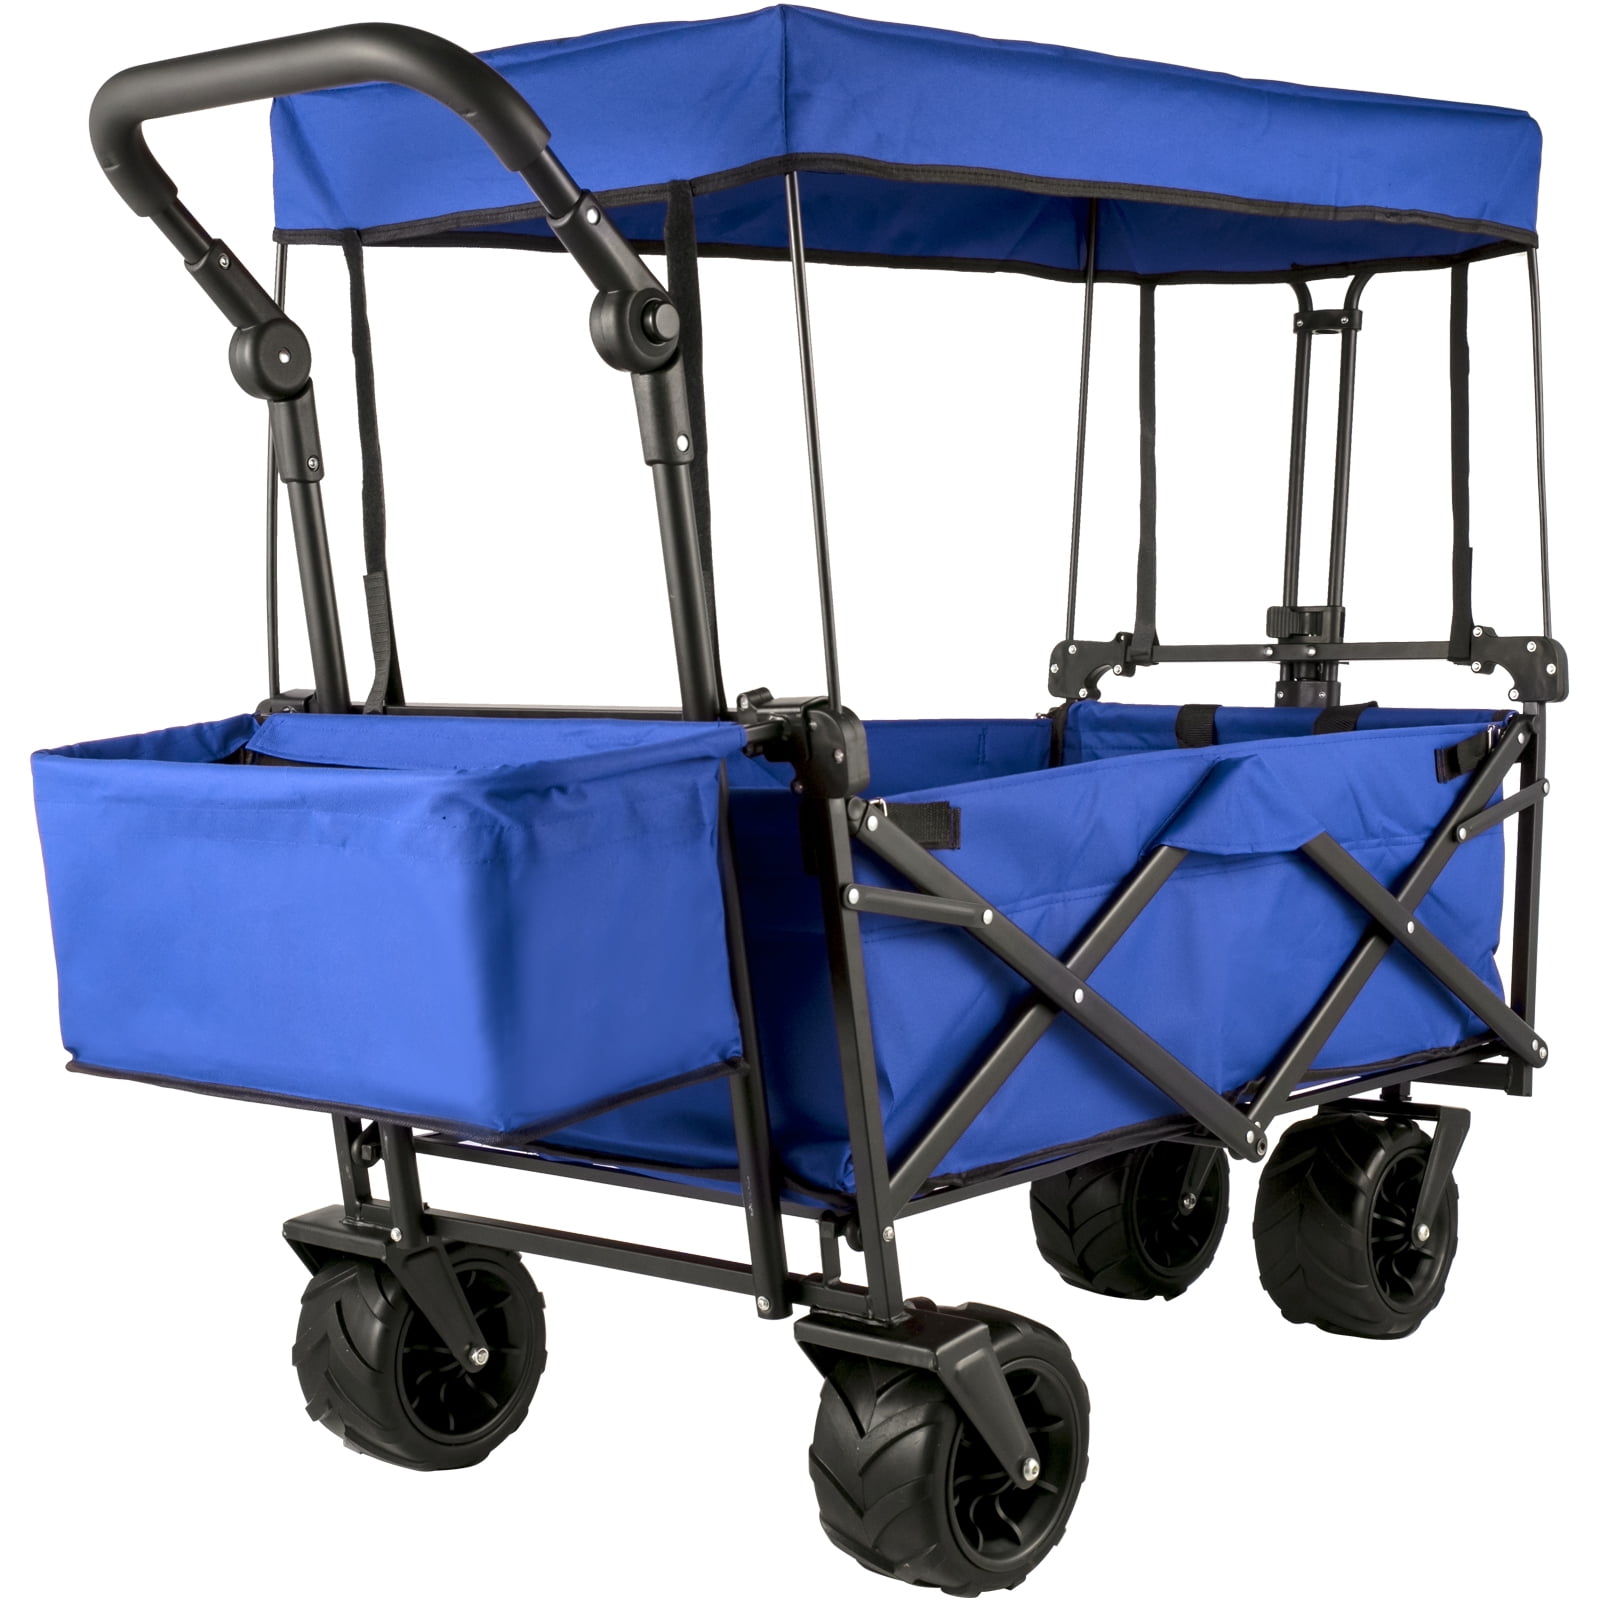 Lovinland Collasible Folding Wagon Cart,Outdoor Shopping Utility Cart Beach Wagon Heavy Duty Garden Wagon Cart for Shopping Camping and Outdoor Activities Blue